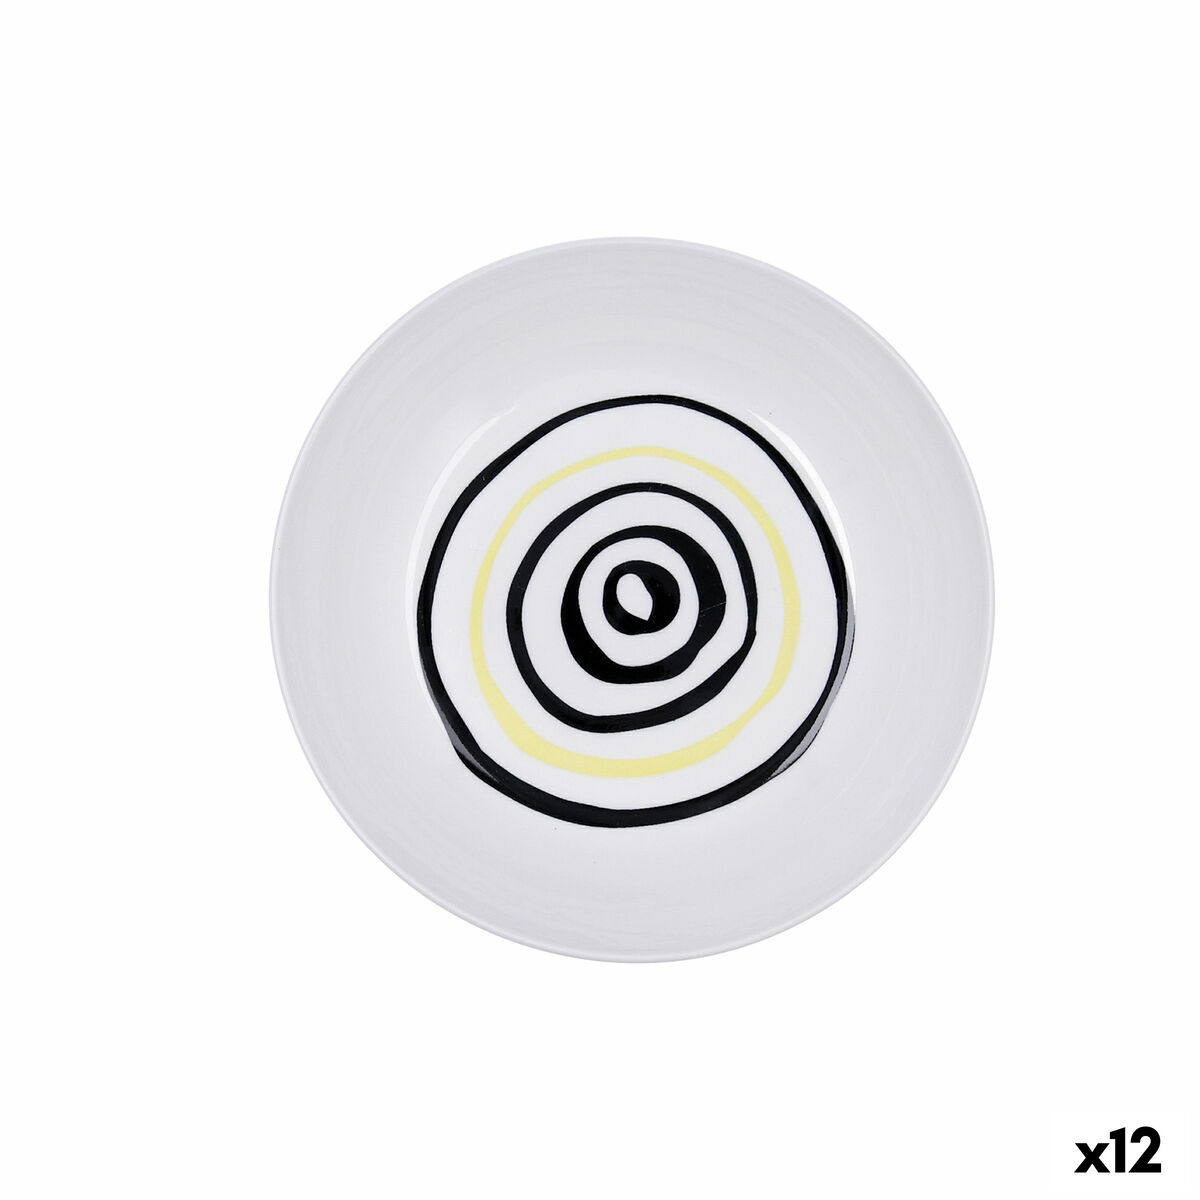 Плоска чиния Bidasoa Cosmos Бял Керамика Ø 26 cm (12 броя)